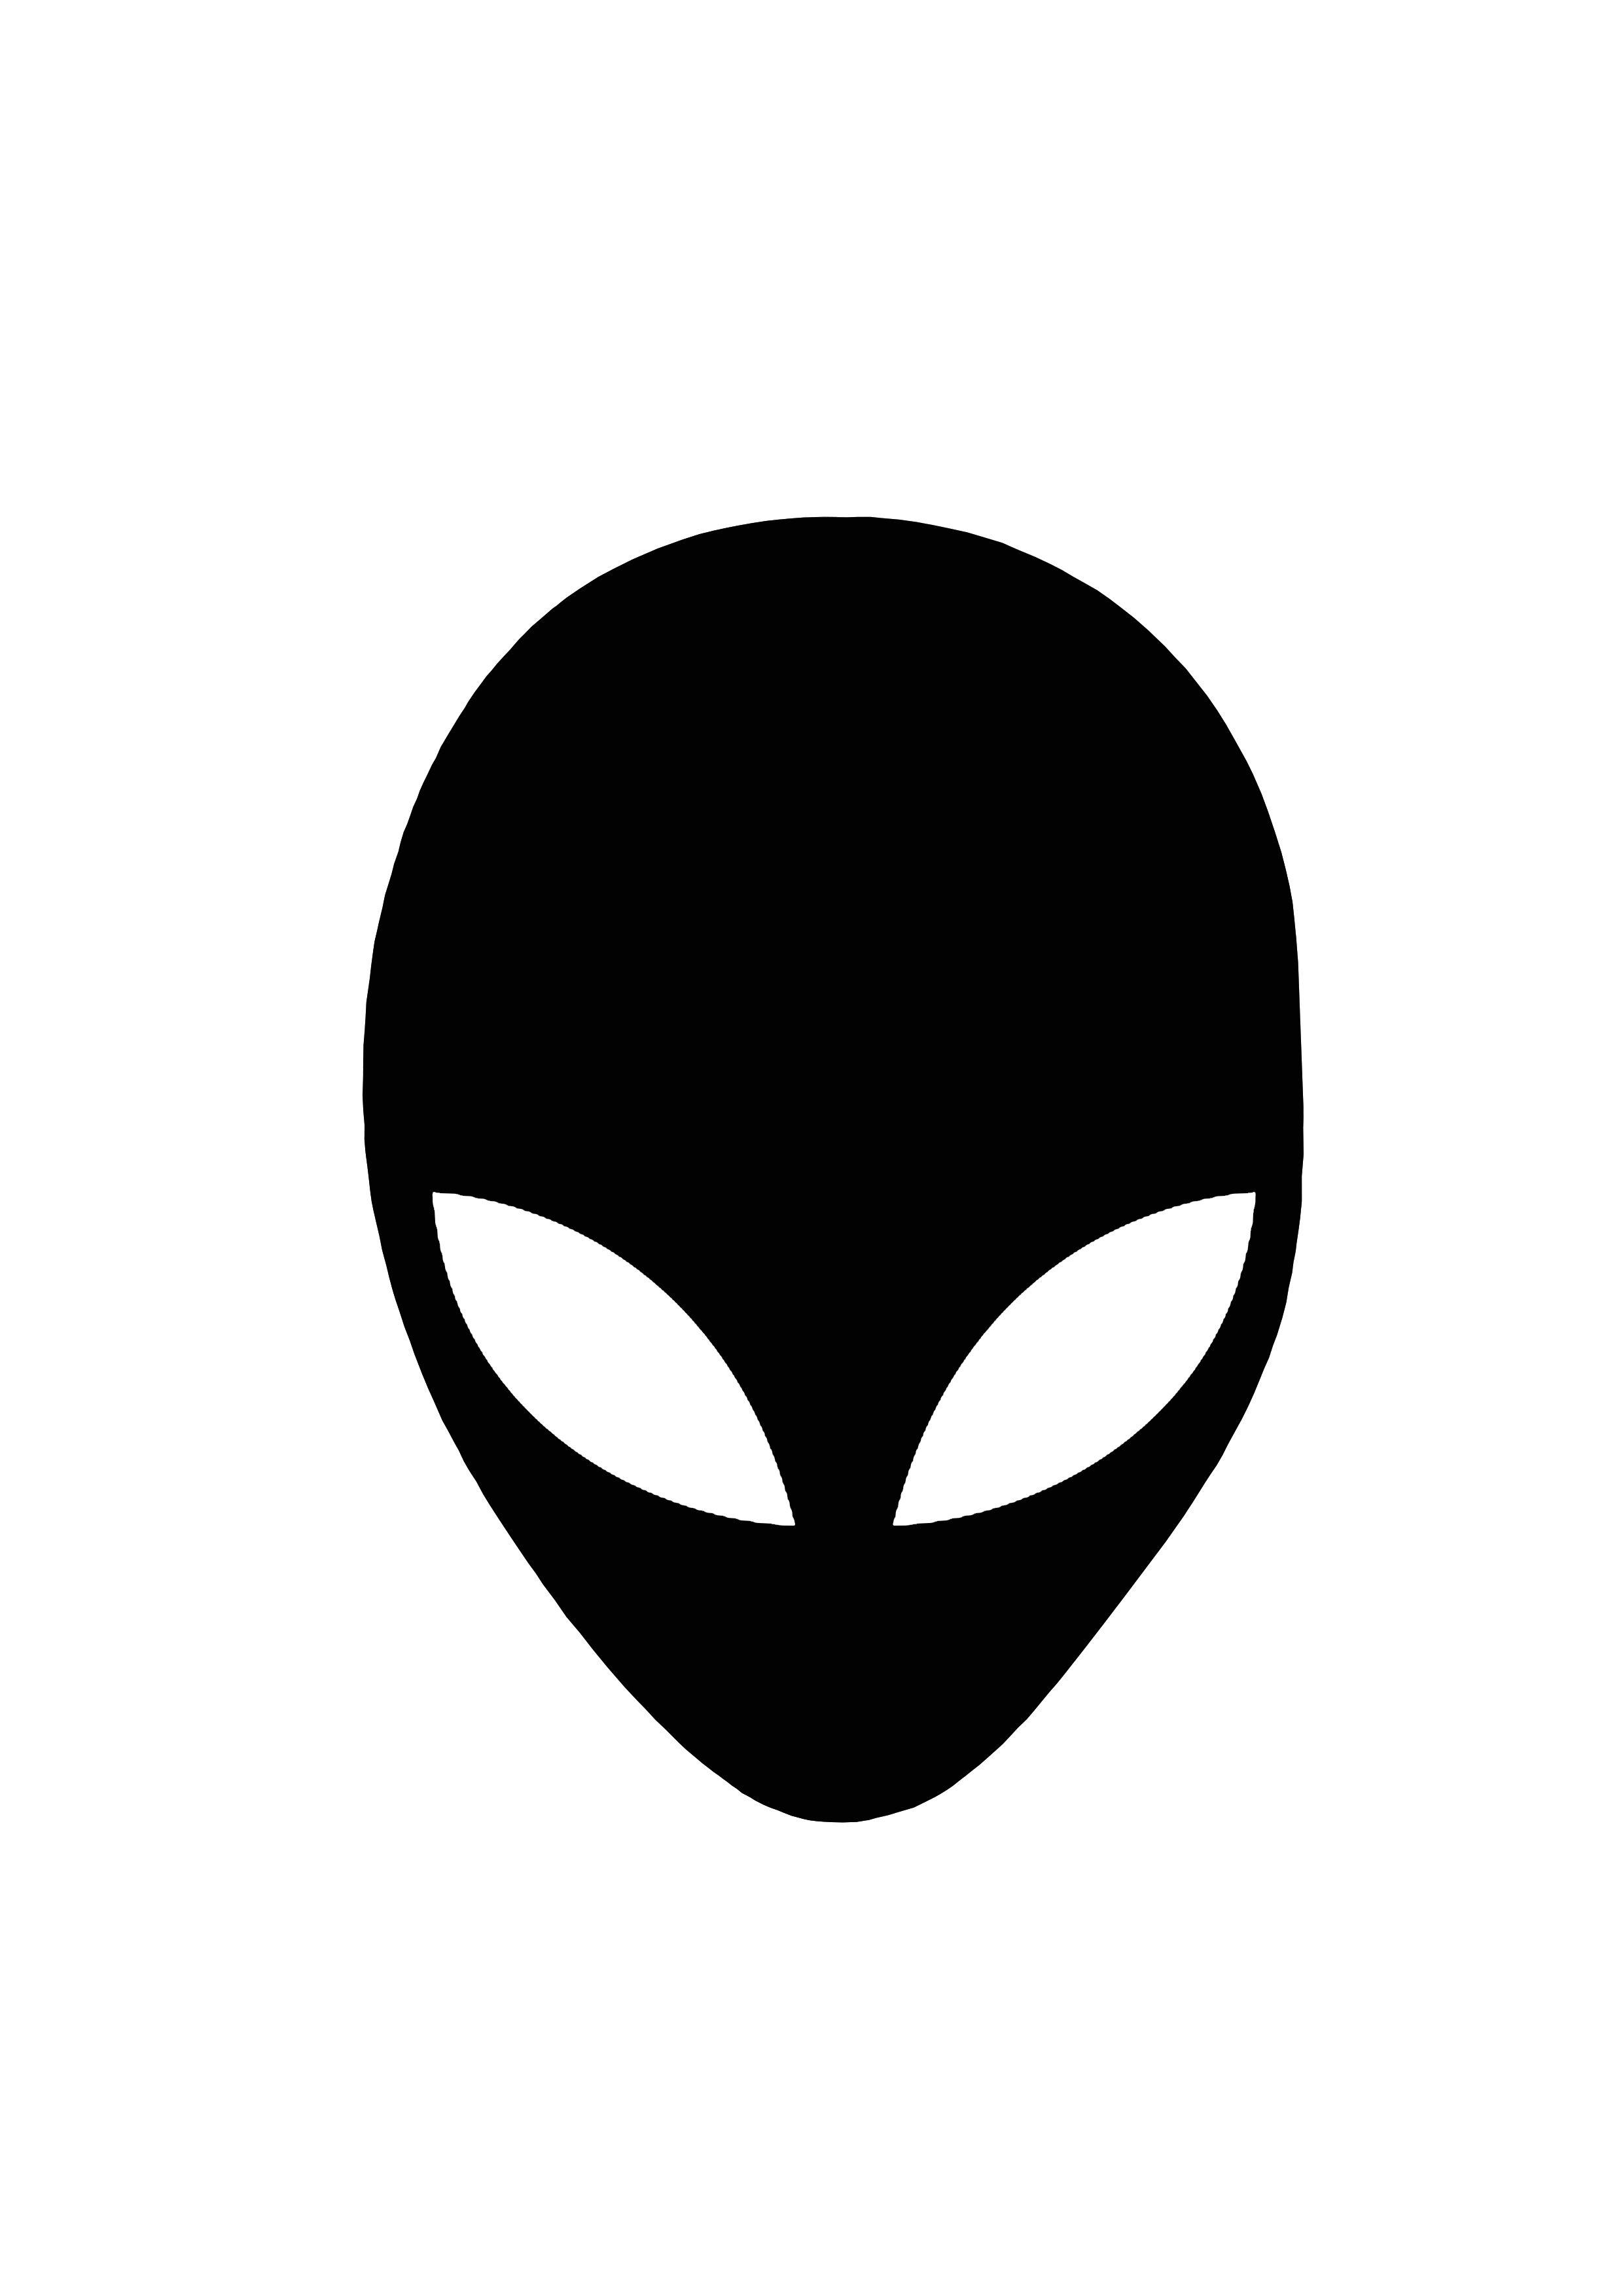 Alien Face Logo - Alien Head Vector at GetDrawings.com | Free for personal use Alien ...